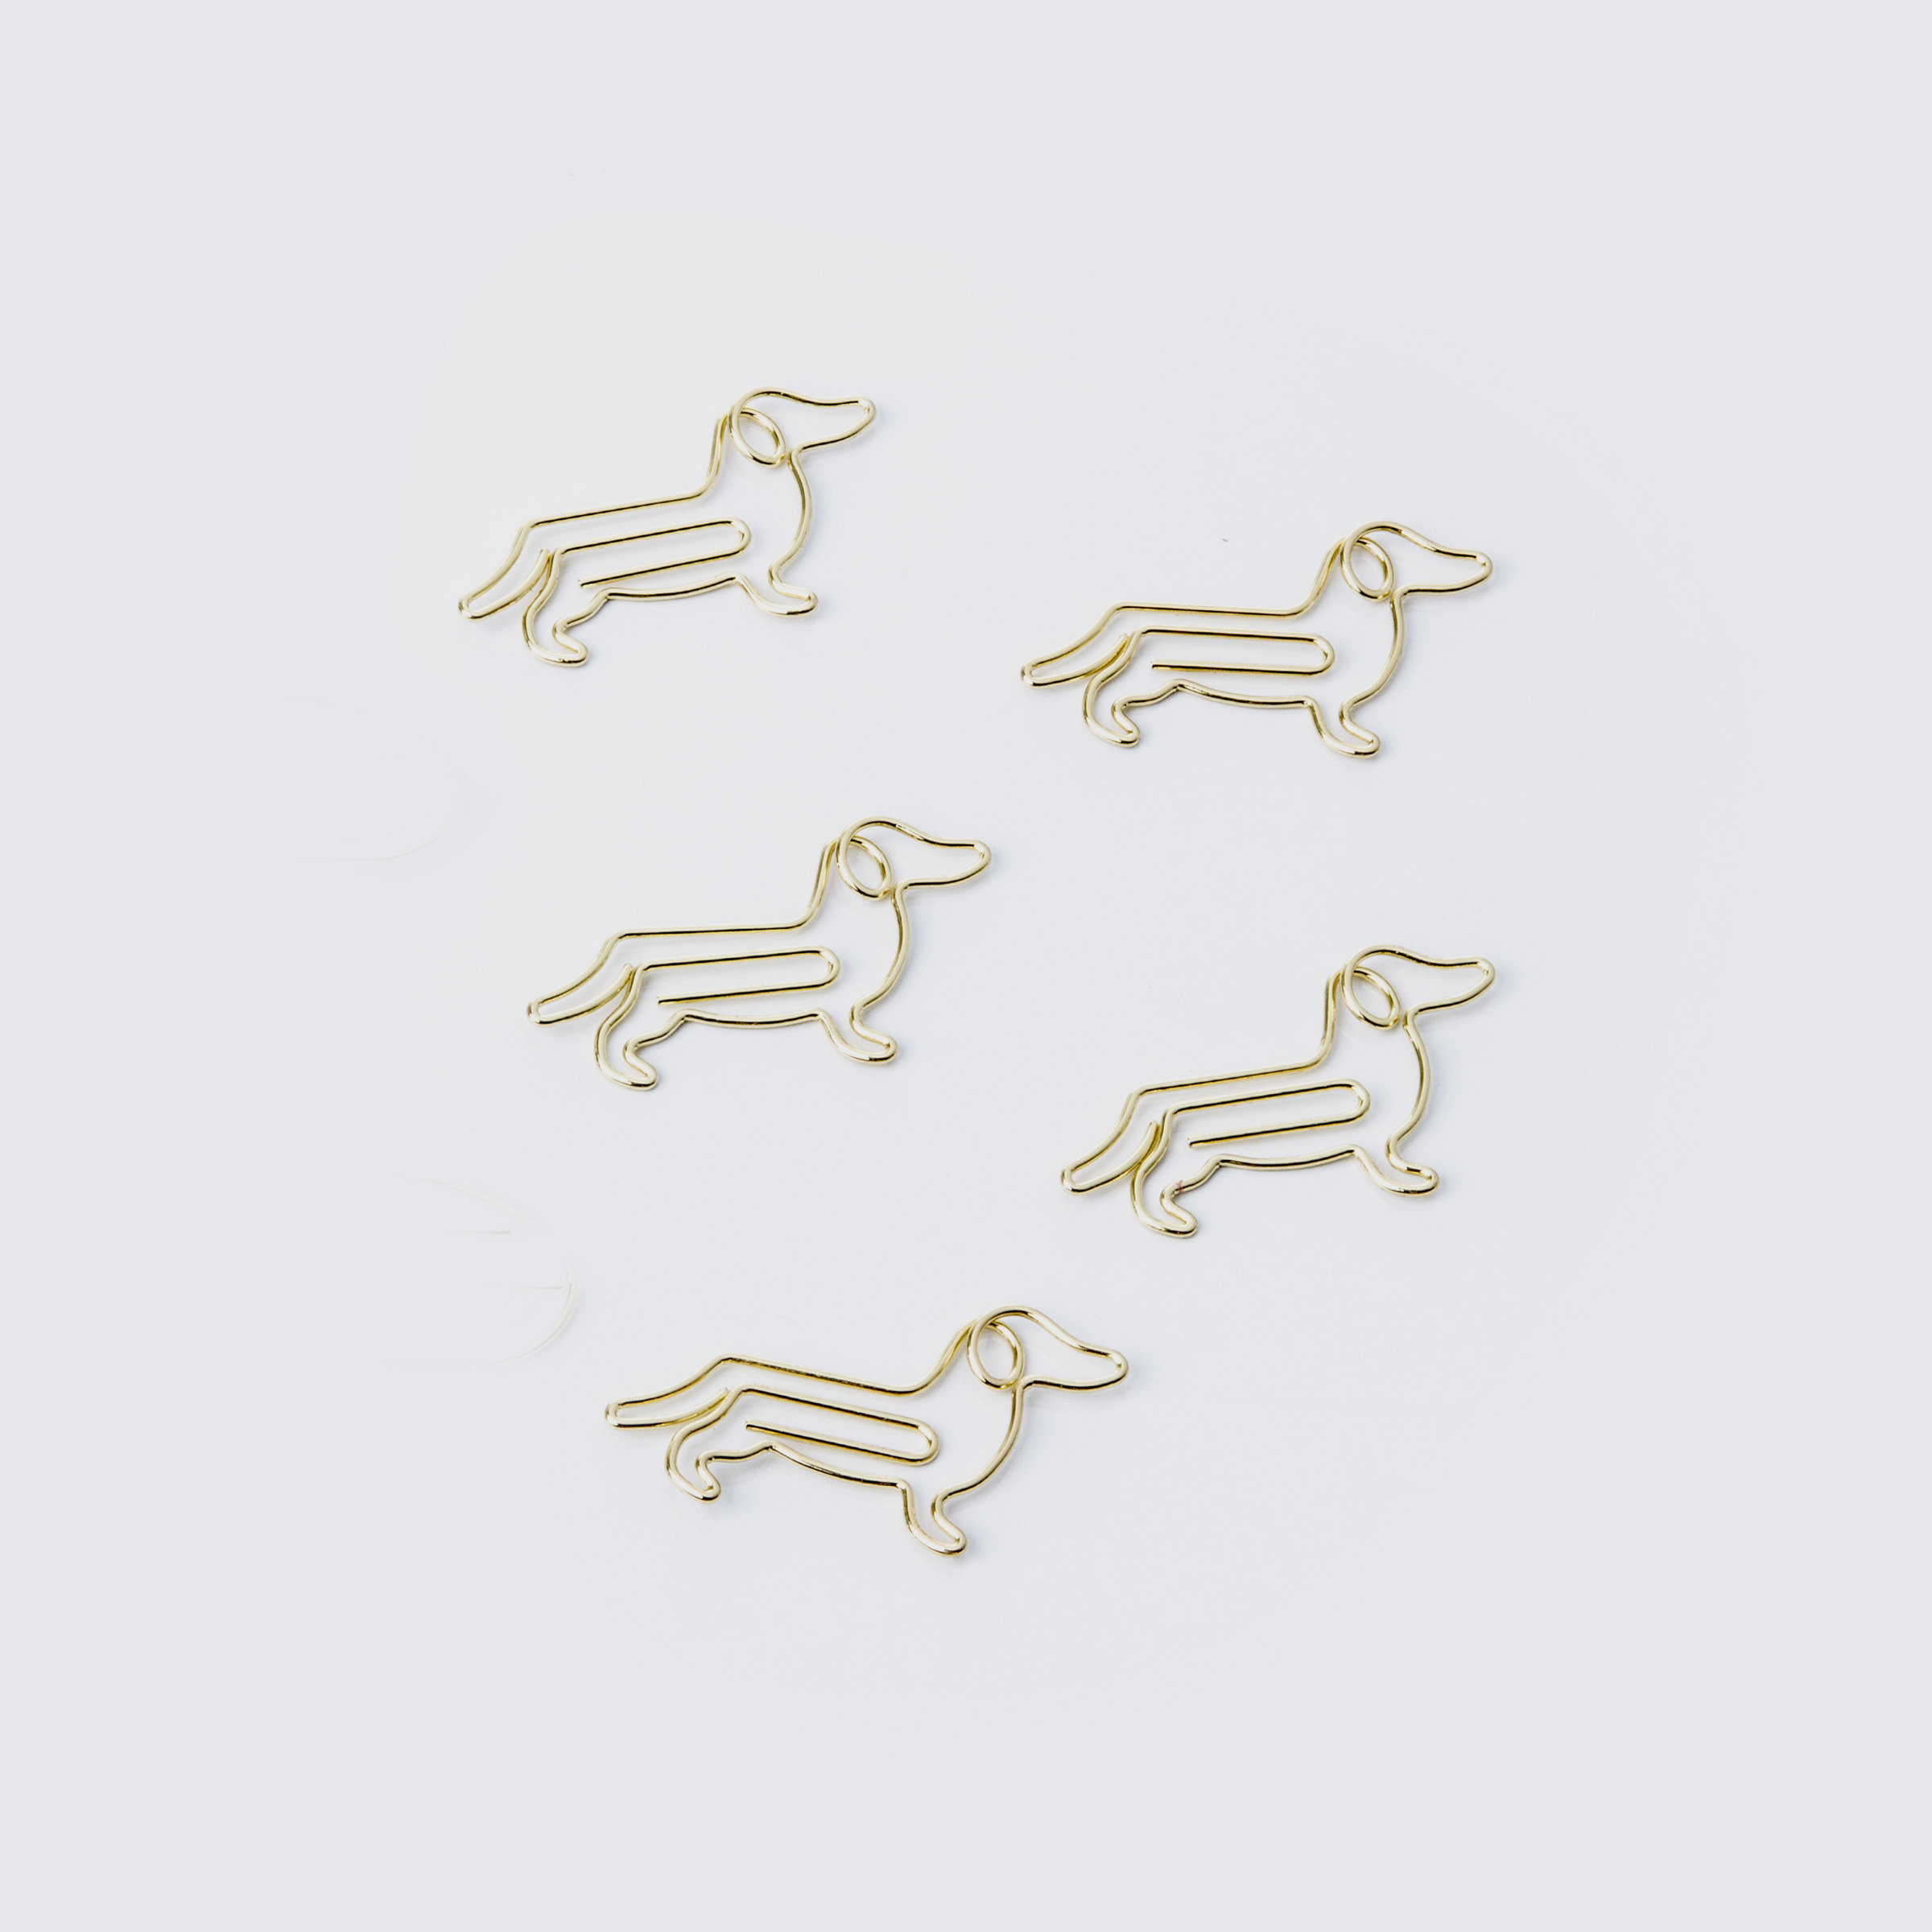 Cute gold dog paper clips